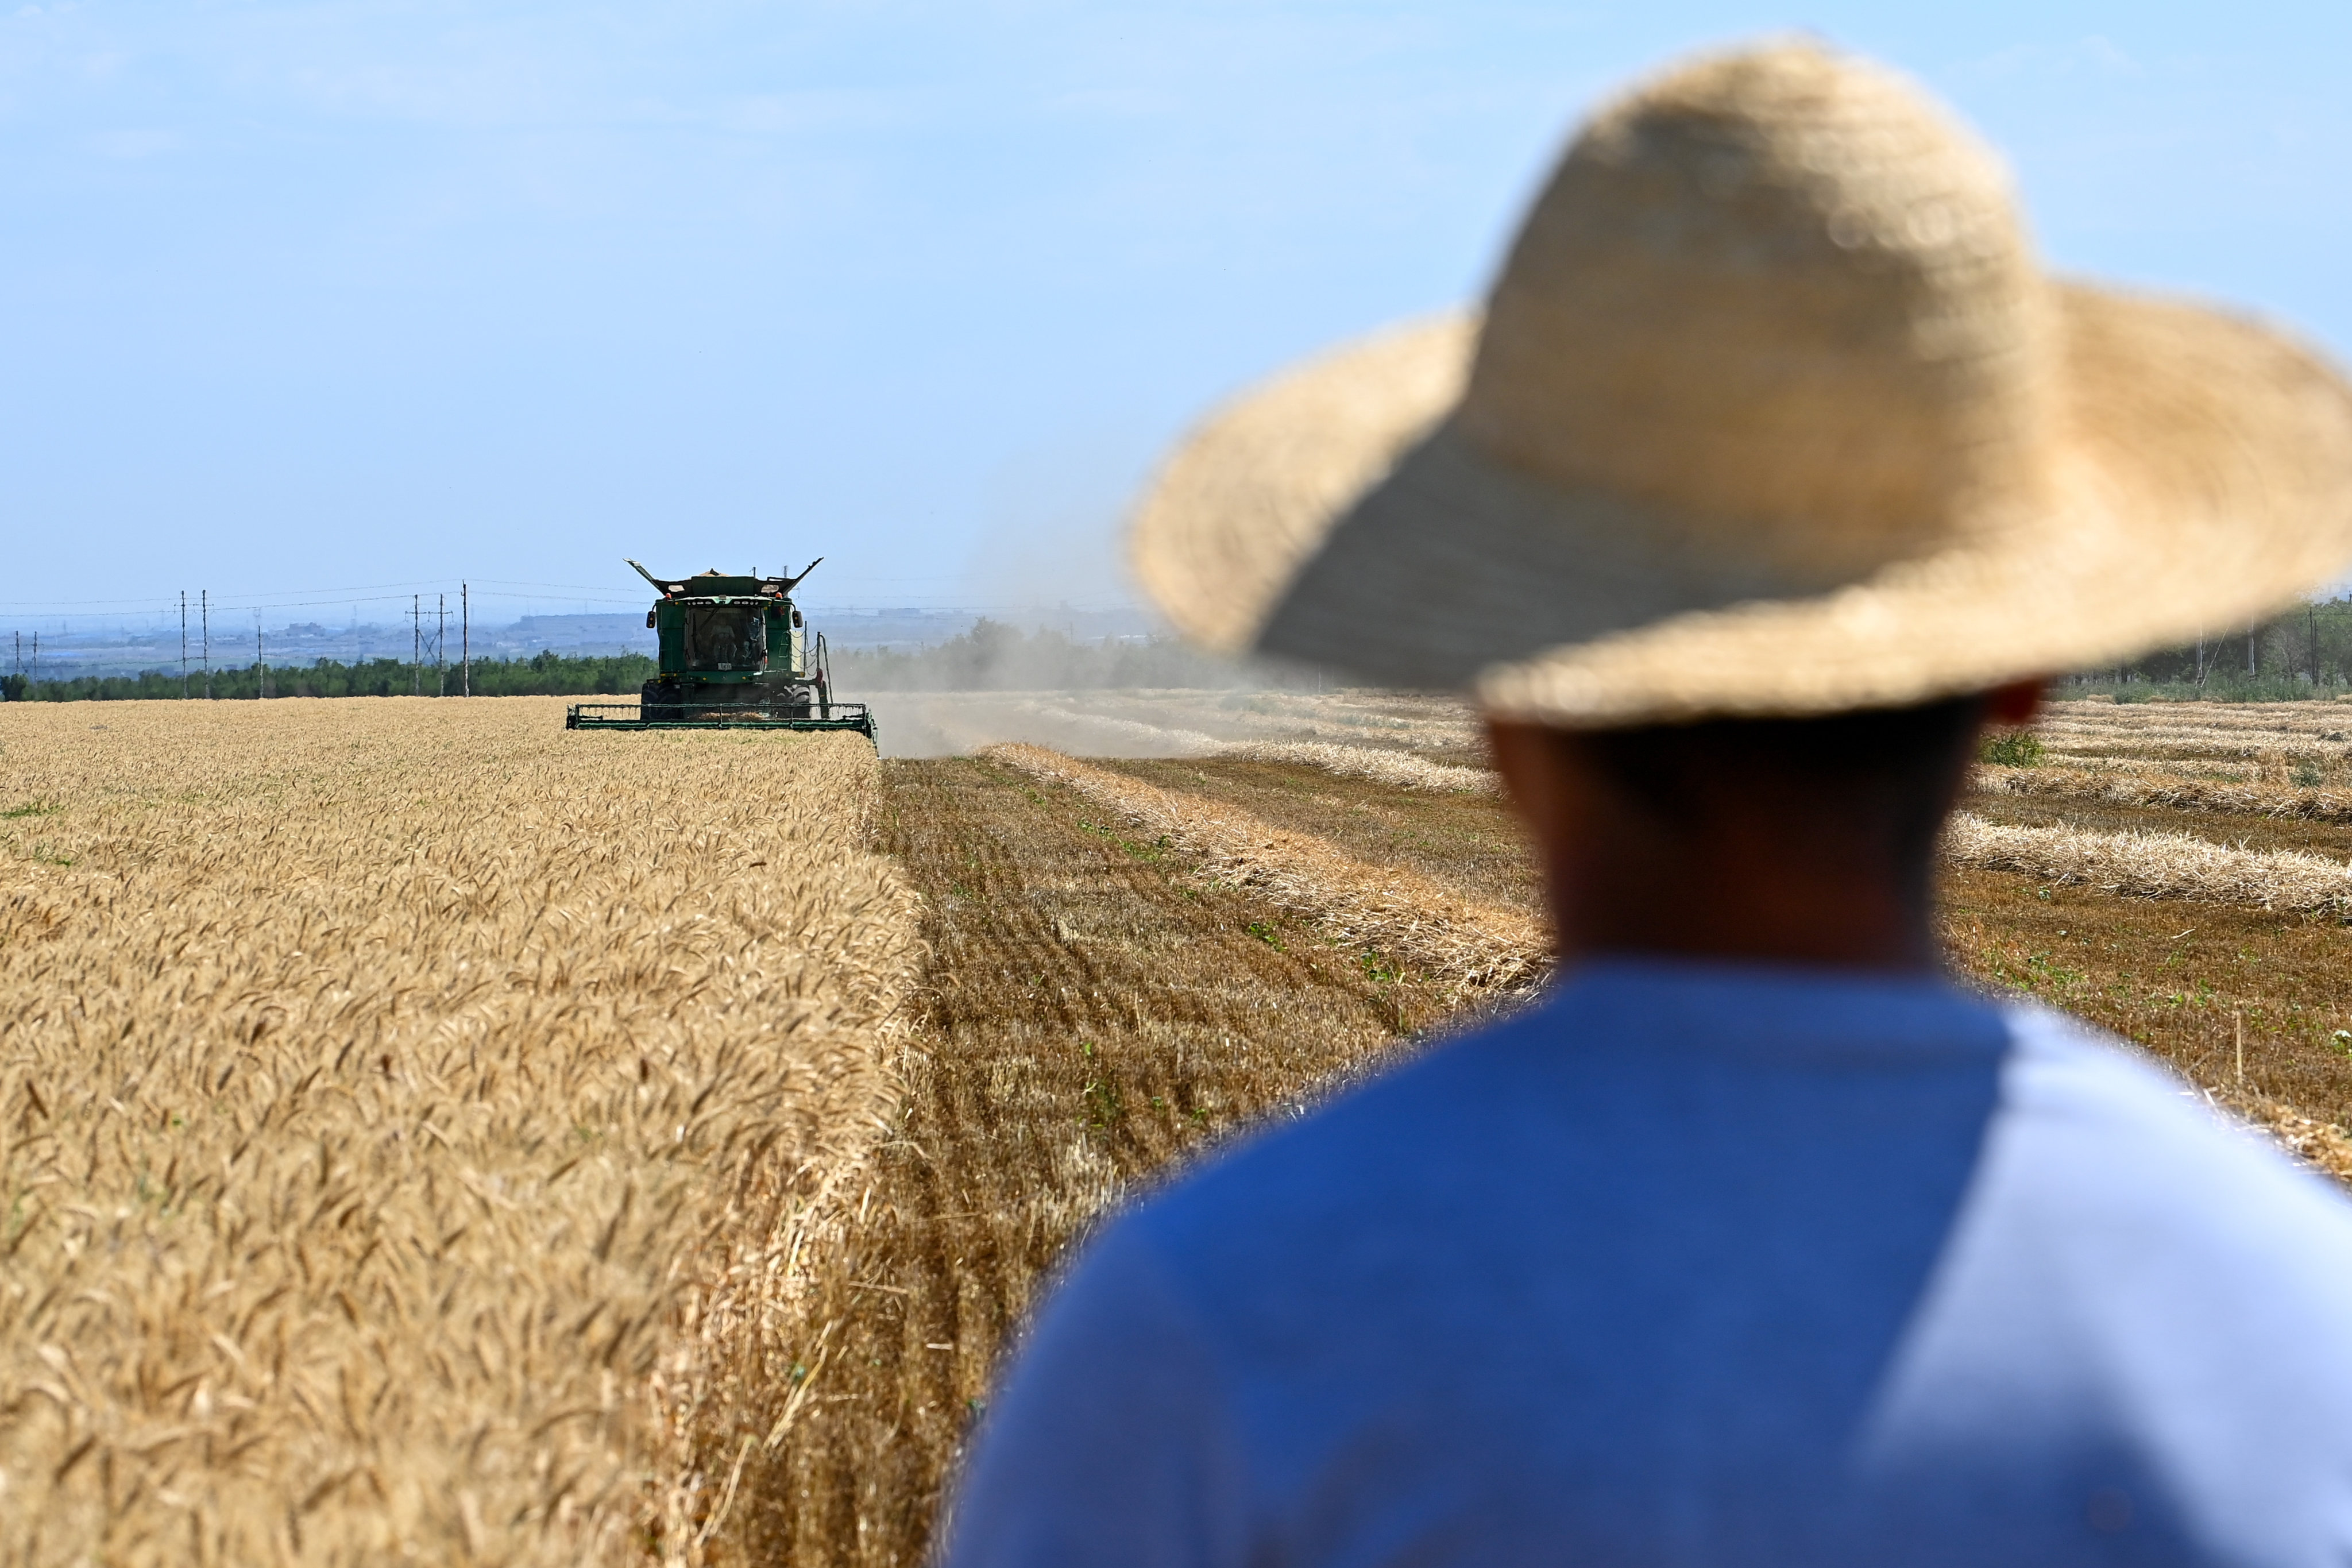 Farmers harvest wheat on Saturday in China’s Xinjiang Uygur autonomous region. Photo: Xinhua